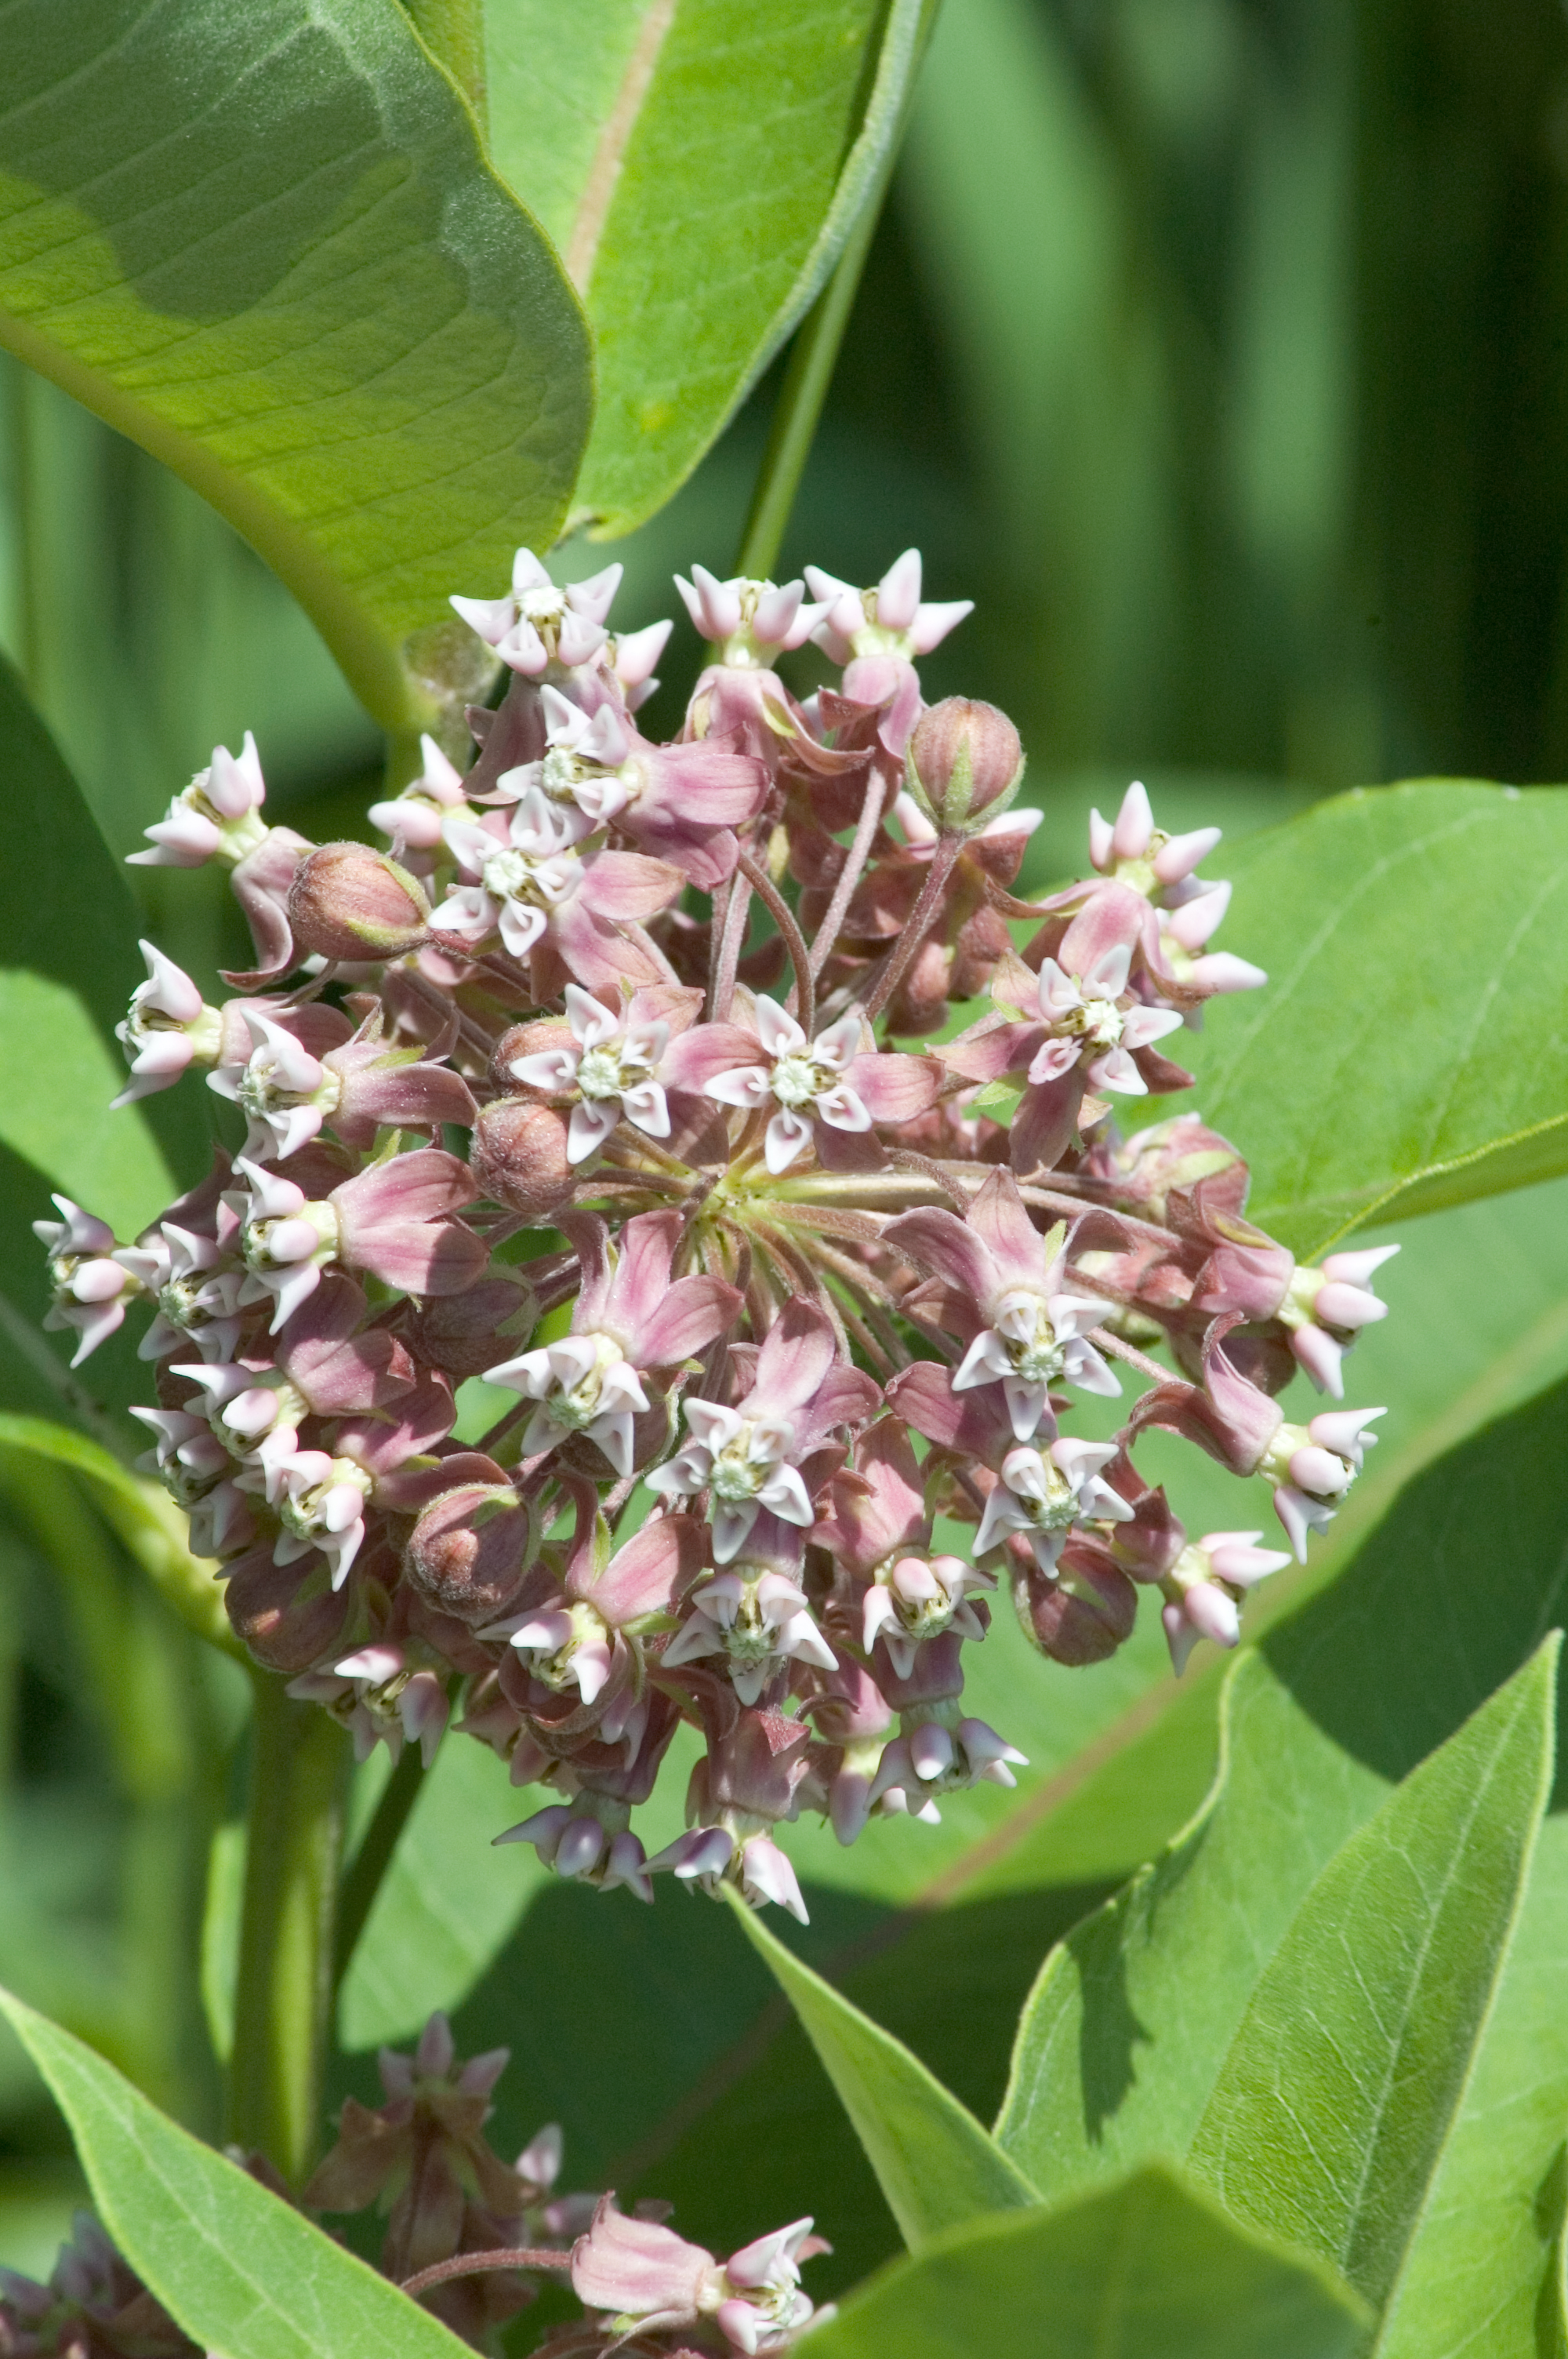 milkweed flower | Pics4Learning